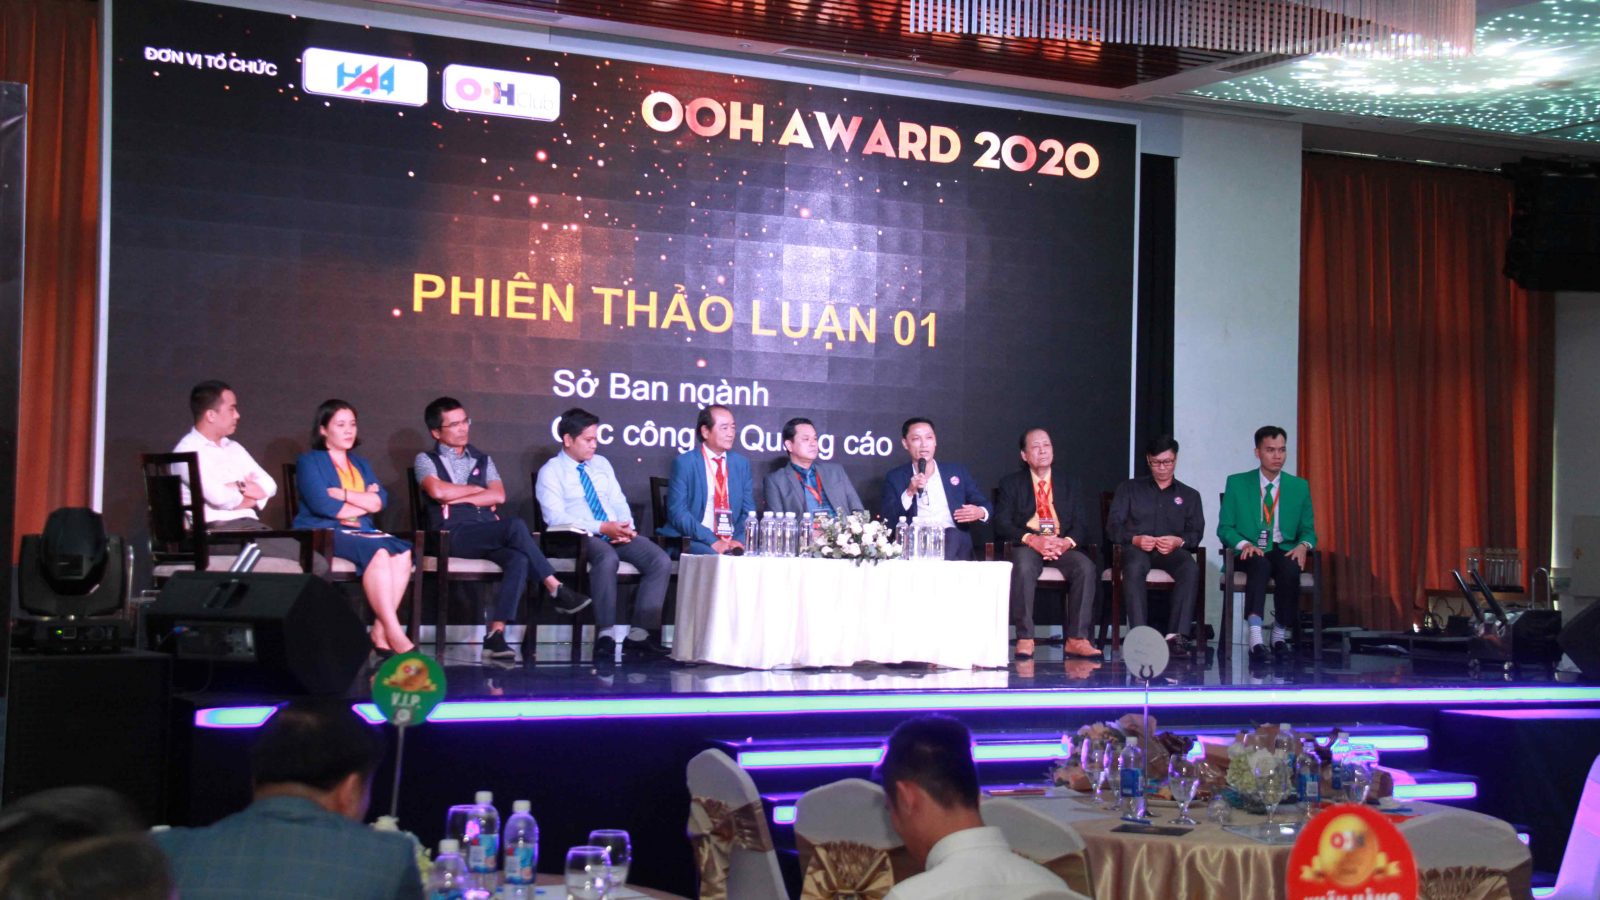 OOH-Award-2020-5-1600x900